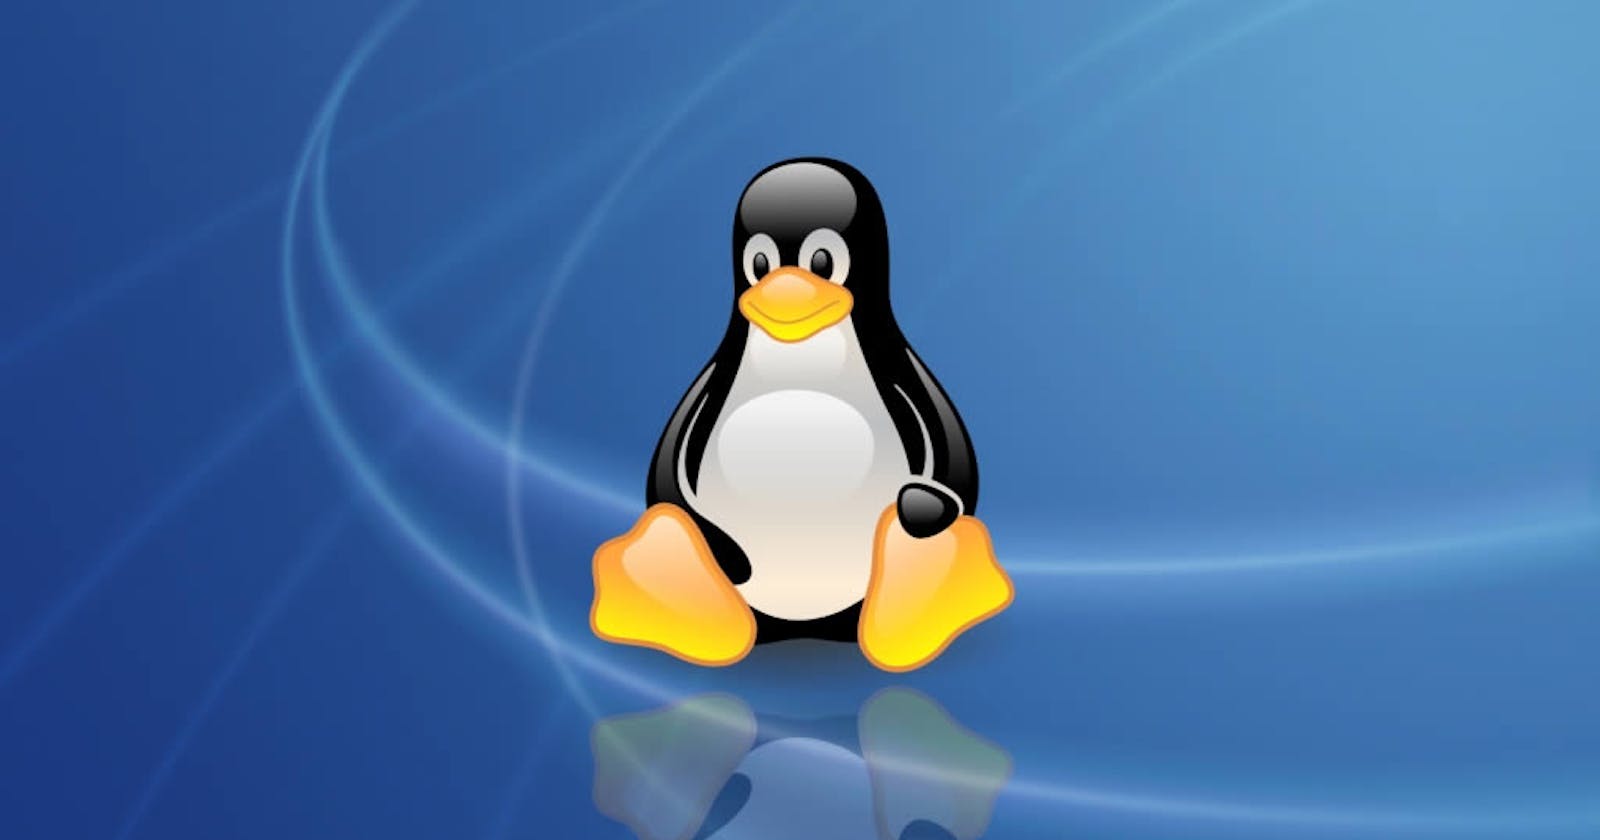 Important Linux Commands for DevOps